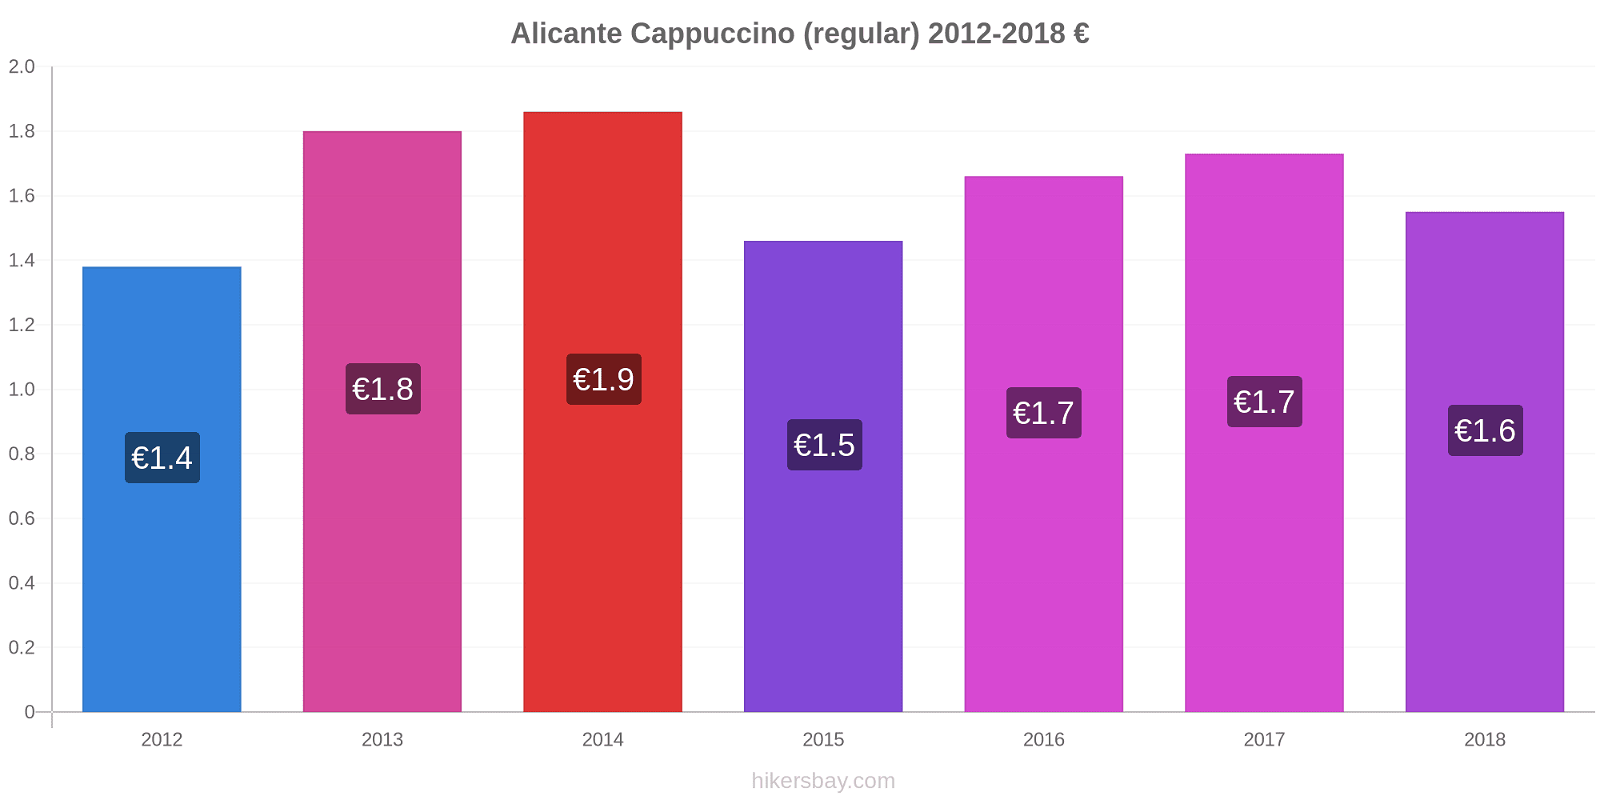 Alicante price changes Cappuccino (regular) hikersbay.com